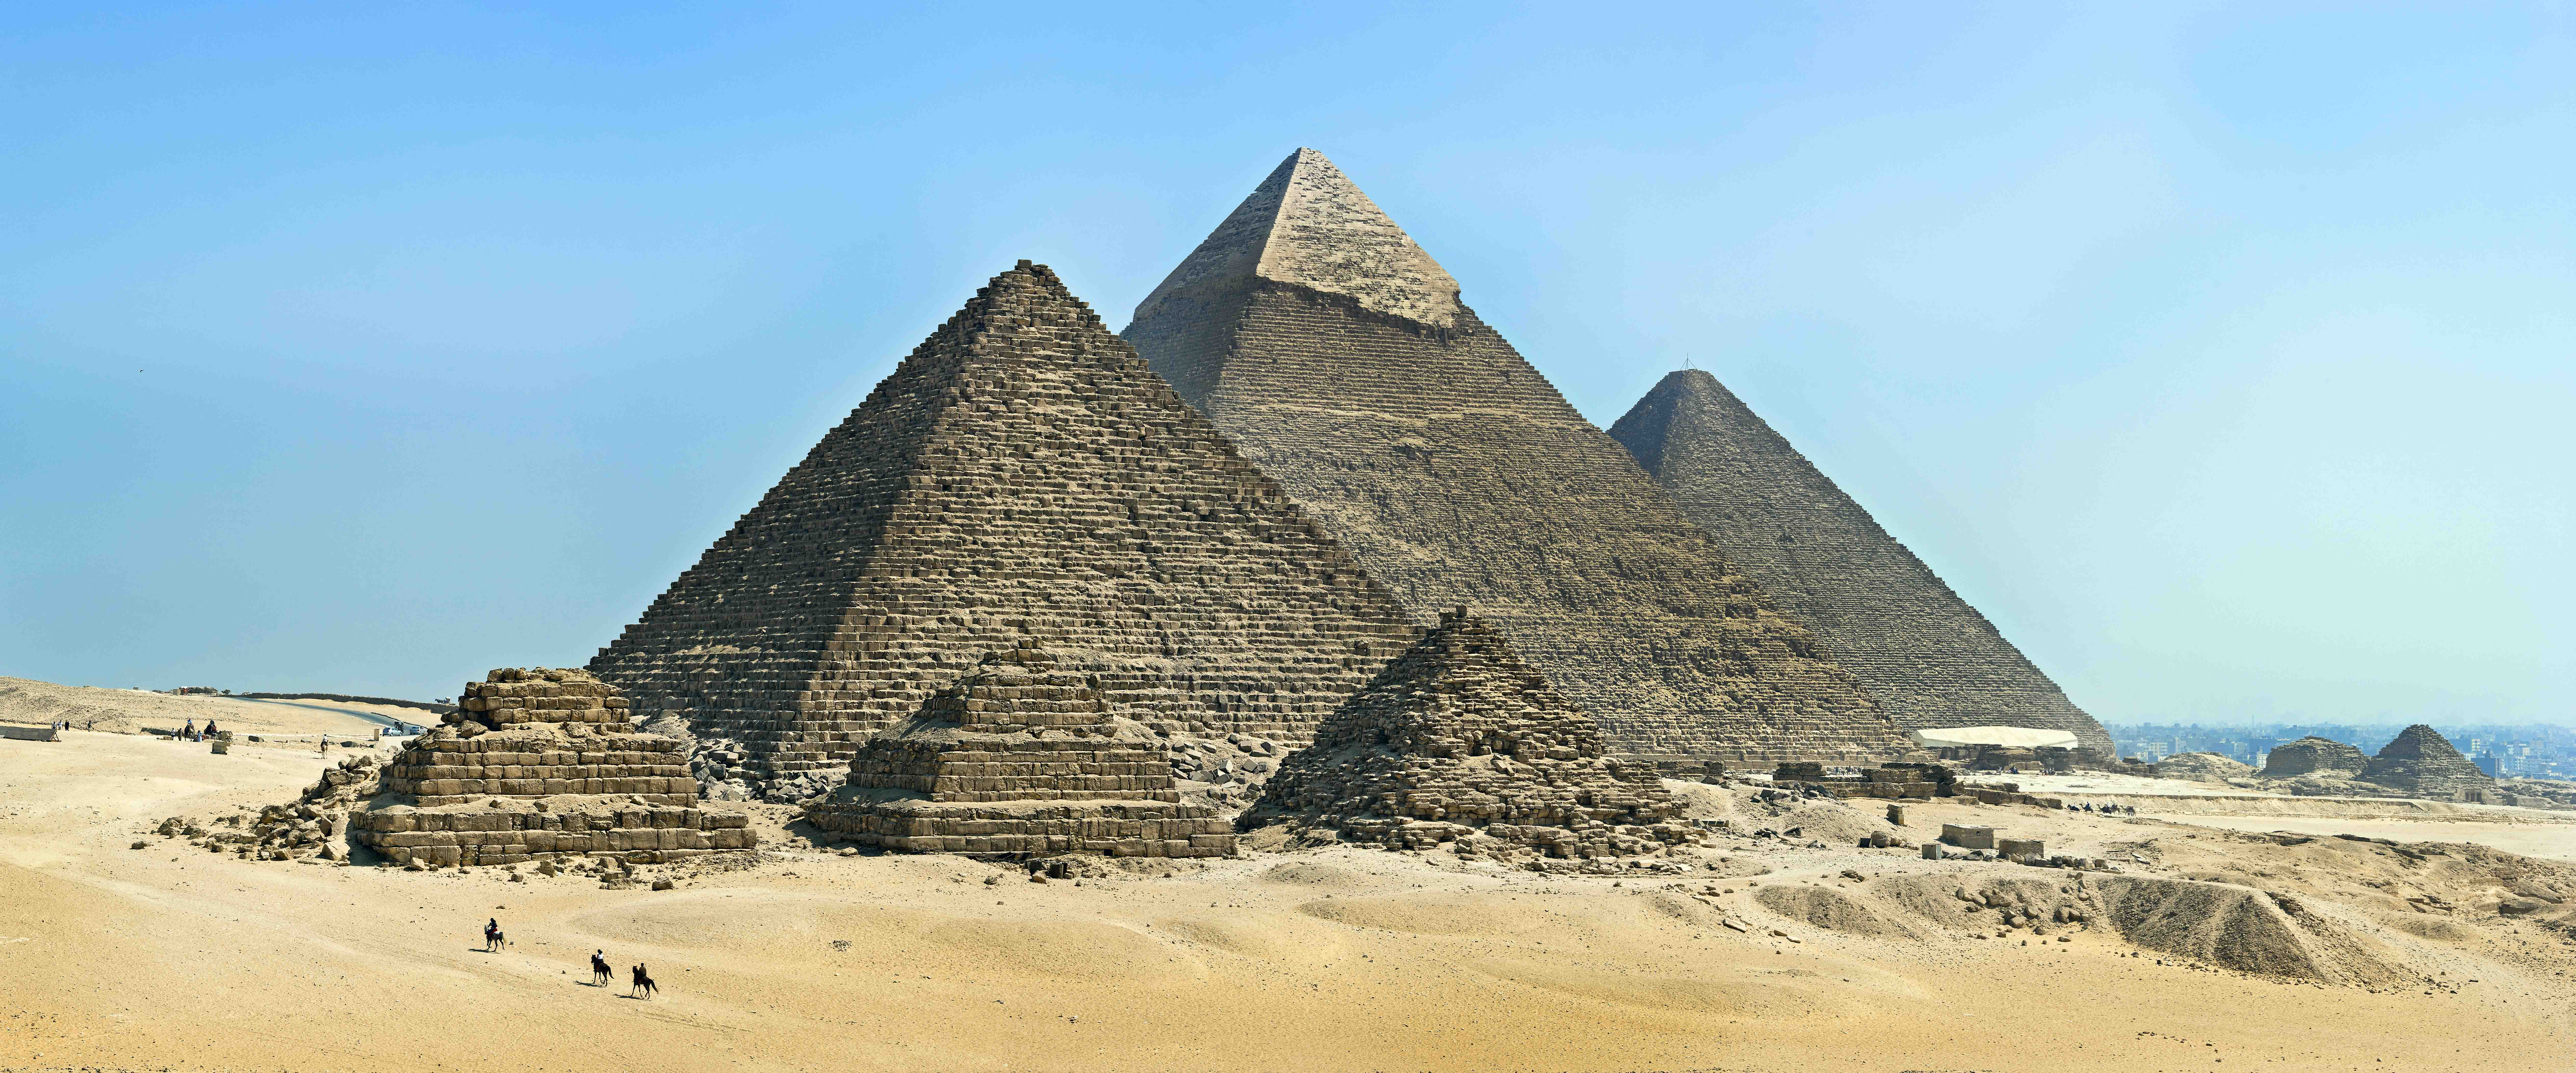 Egypt pyramid landscape sketch illustration image_picture free download  401694907_lovepik.com